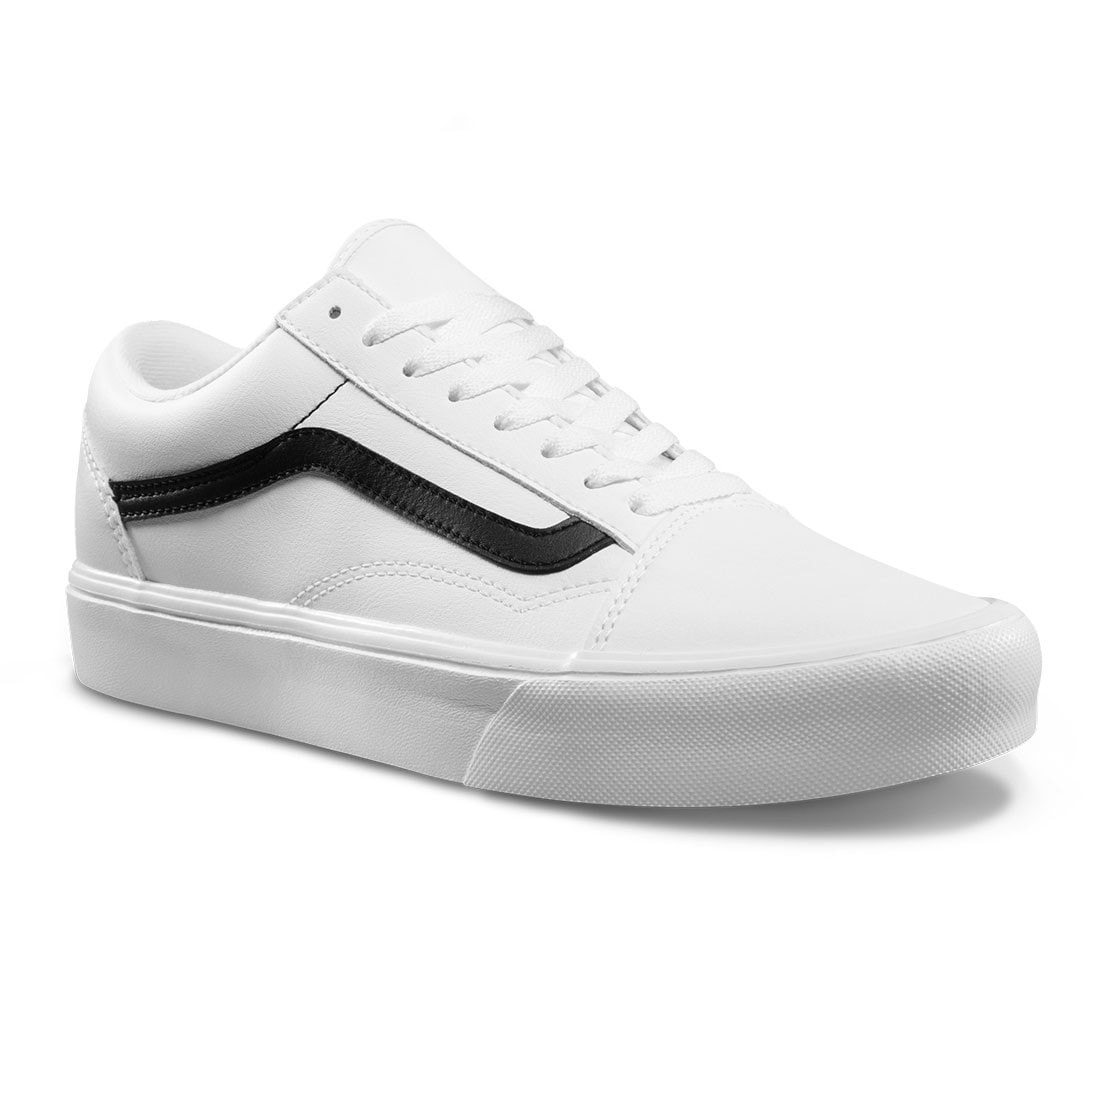 Sneakers Vans Old Skool Lite classic tumble true white/black | Zezula